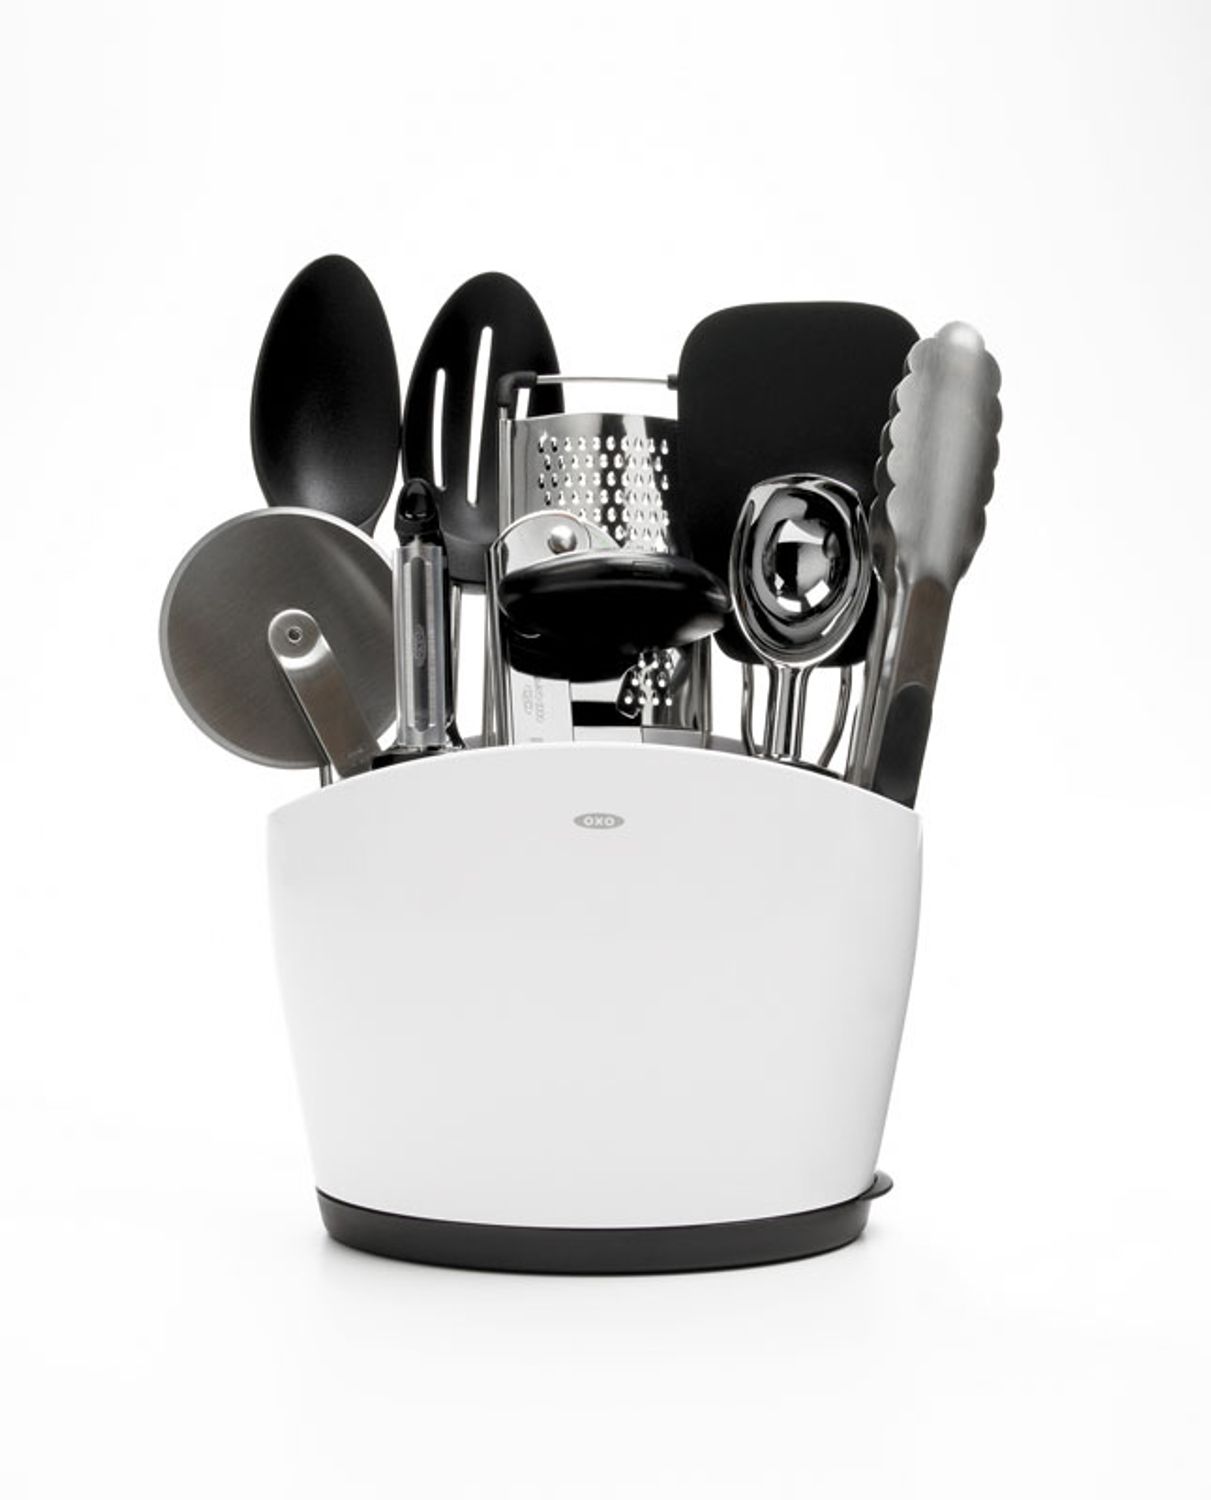 Oxo Good Grips 10-Piece Everyday Kitchen Tool Set